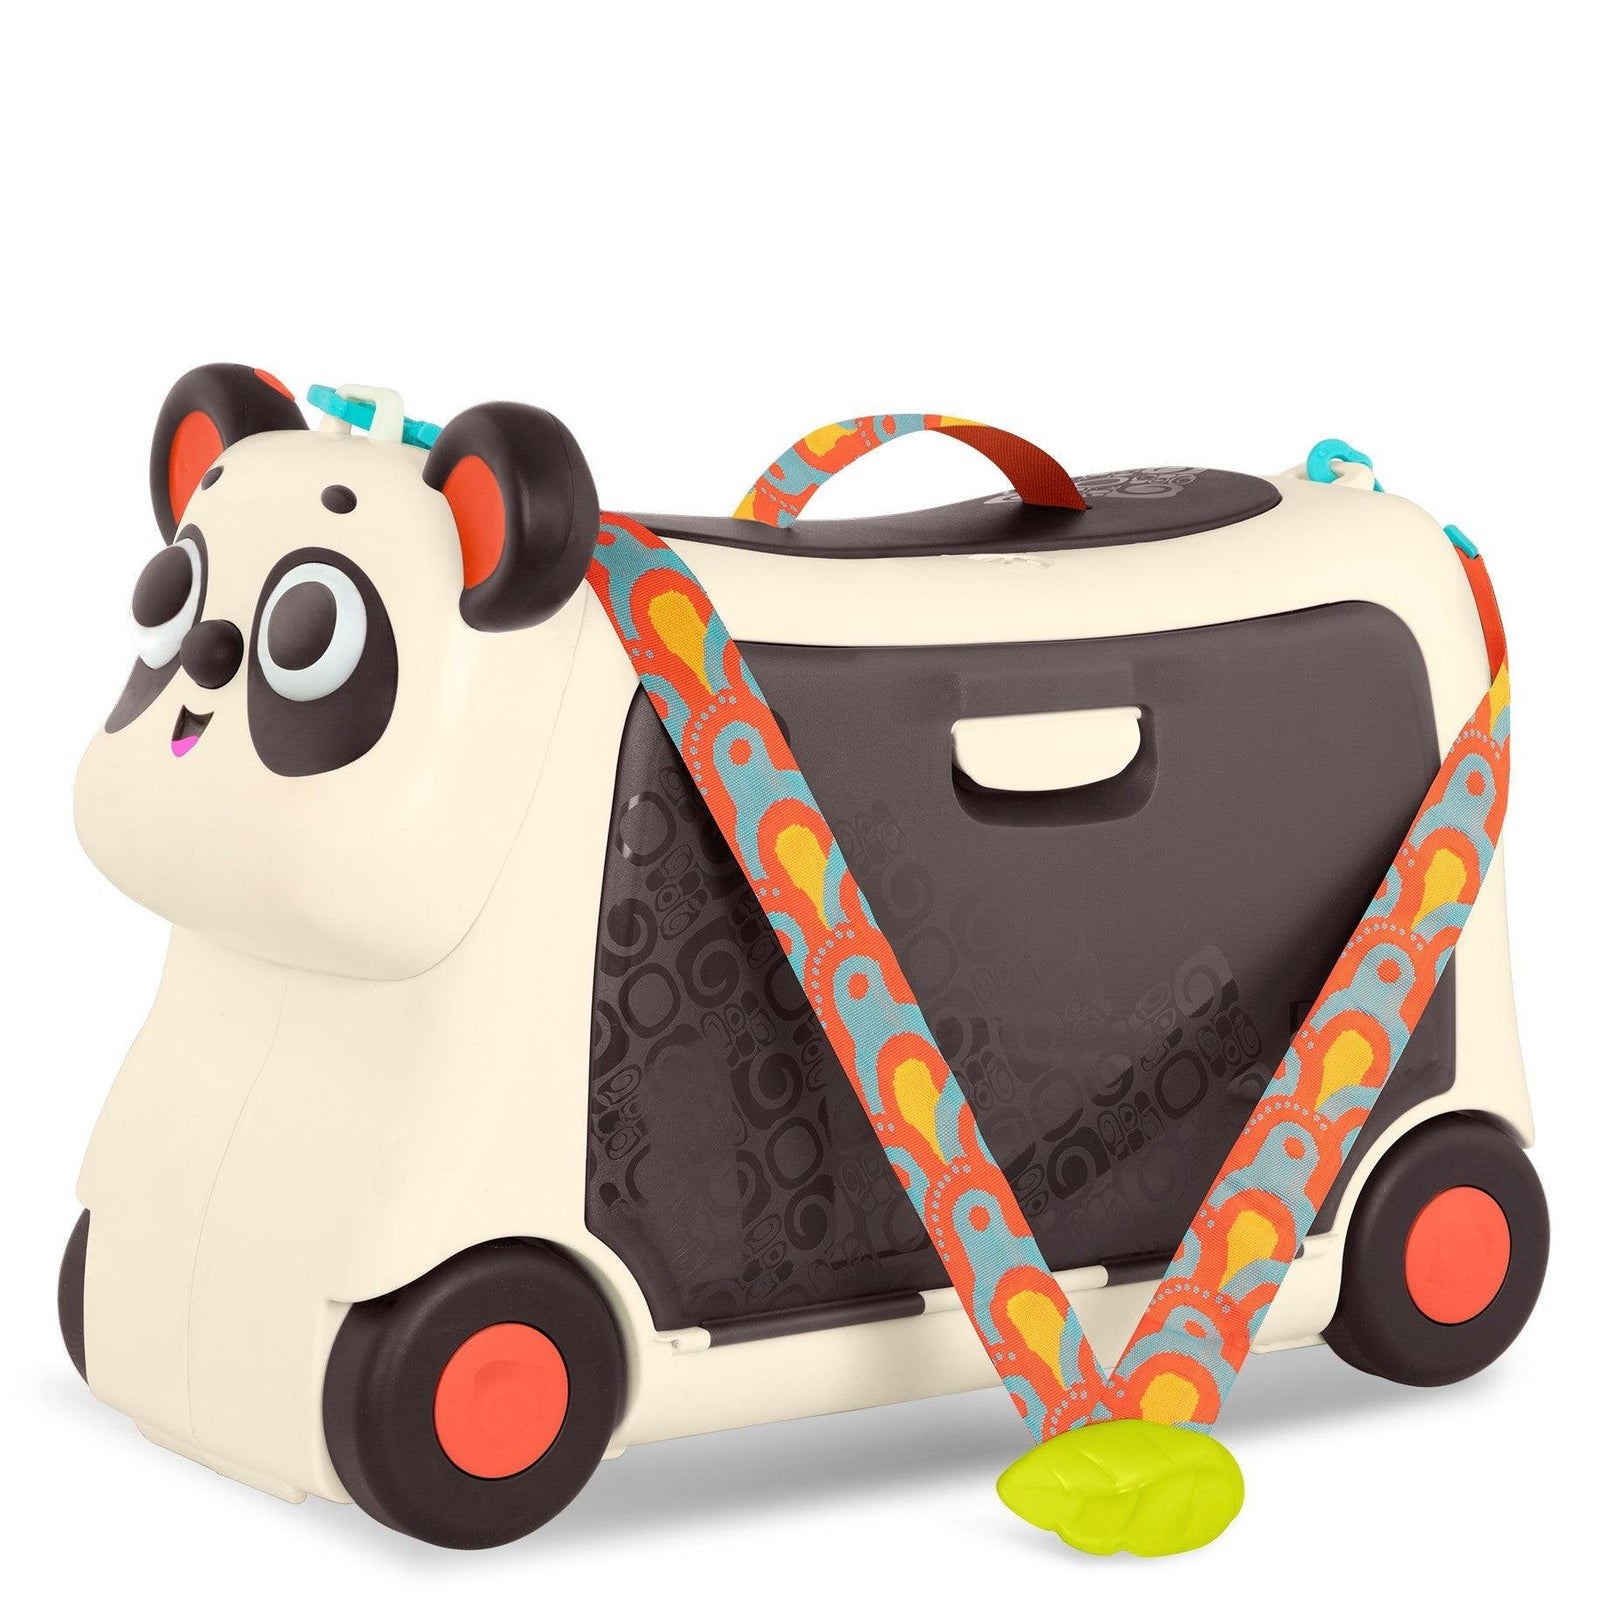 B.Toys: GoGo Ride On Land of B panda suitcase ride.